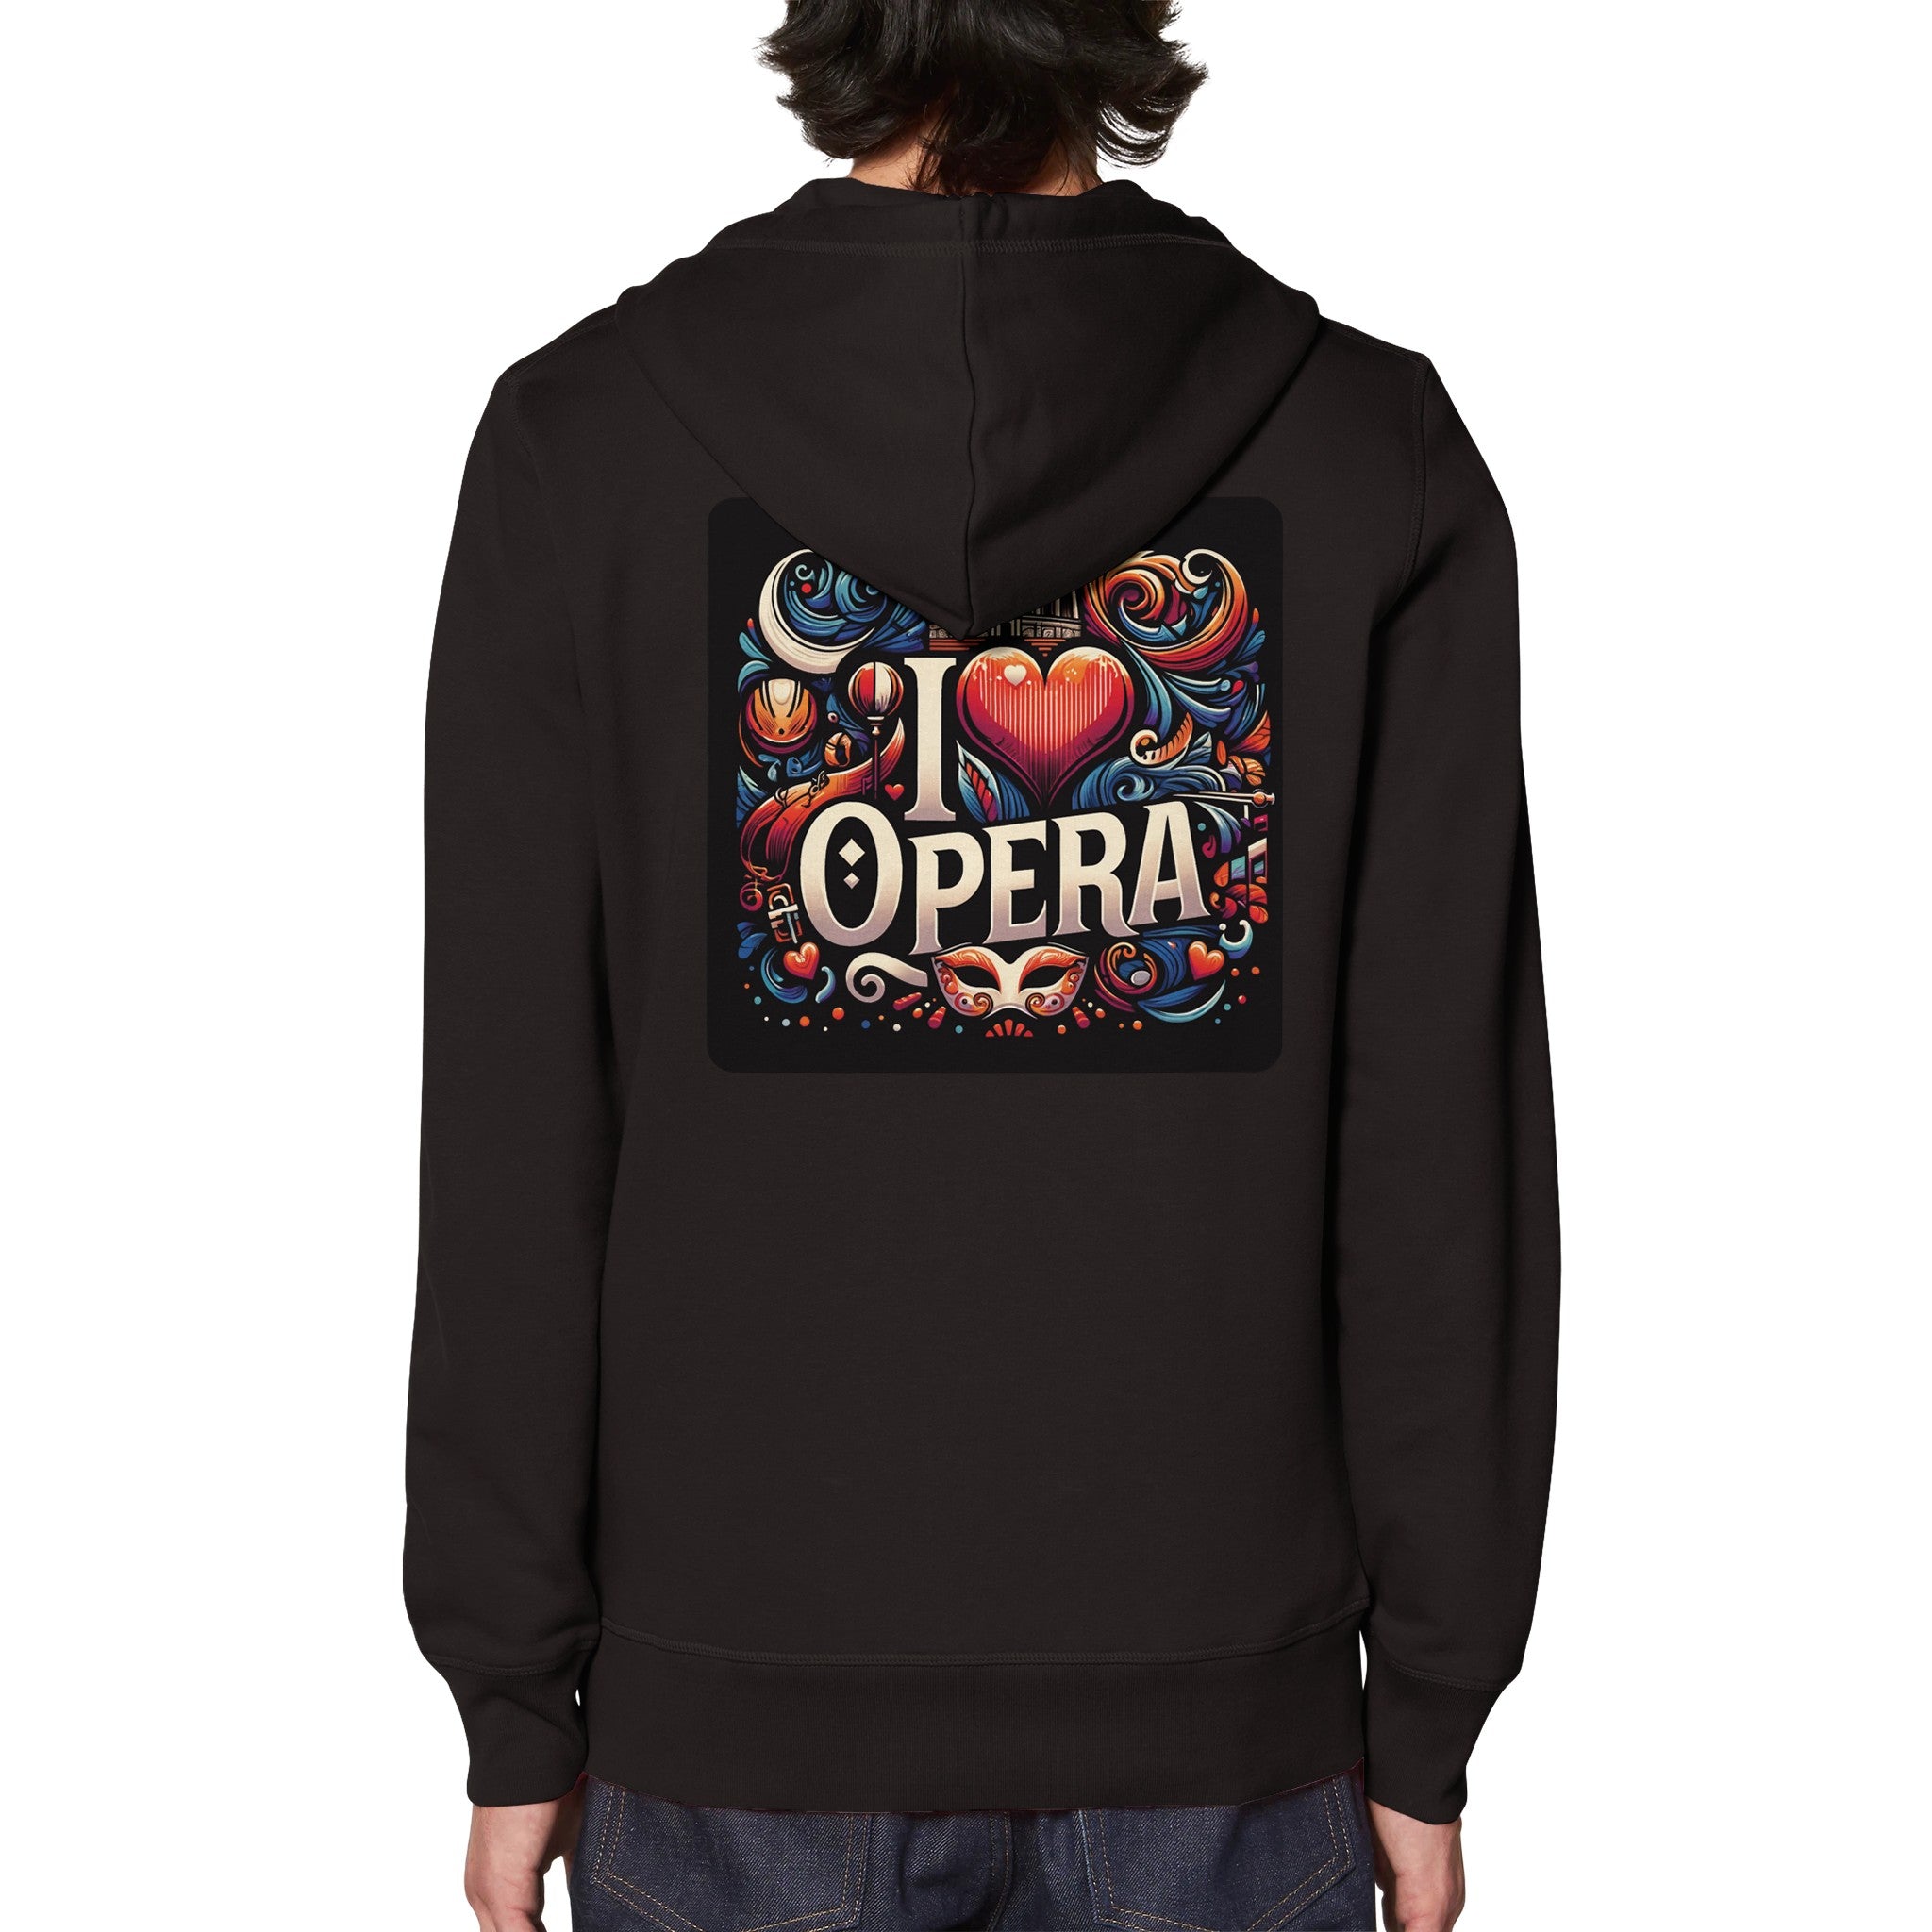 "I love Opera" Økologisk unisex hoodie med lynlås